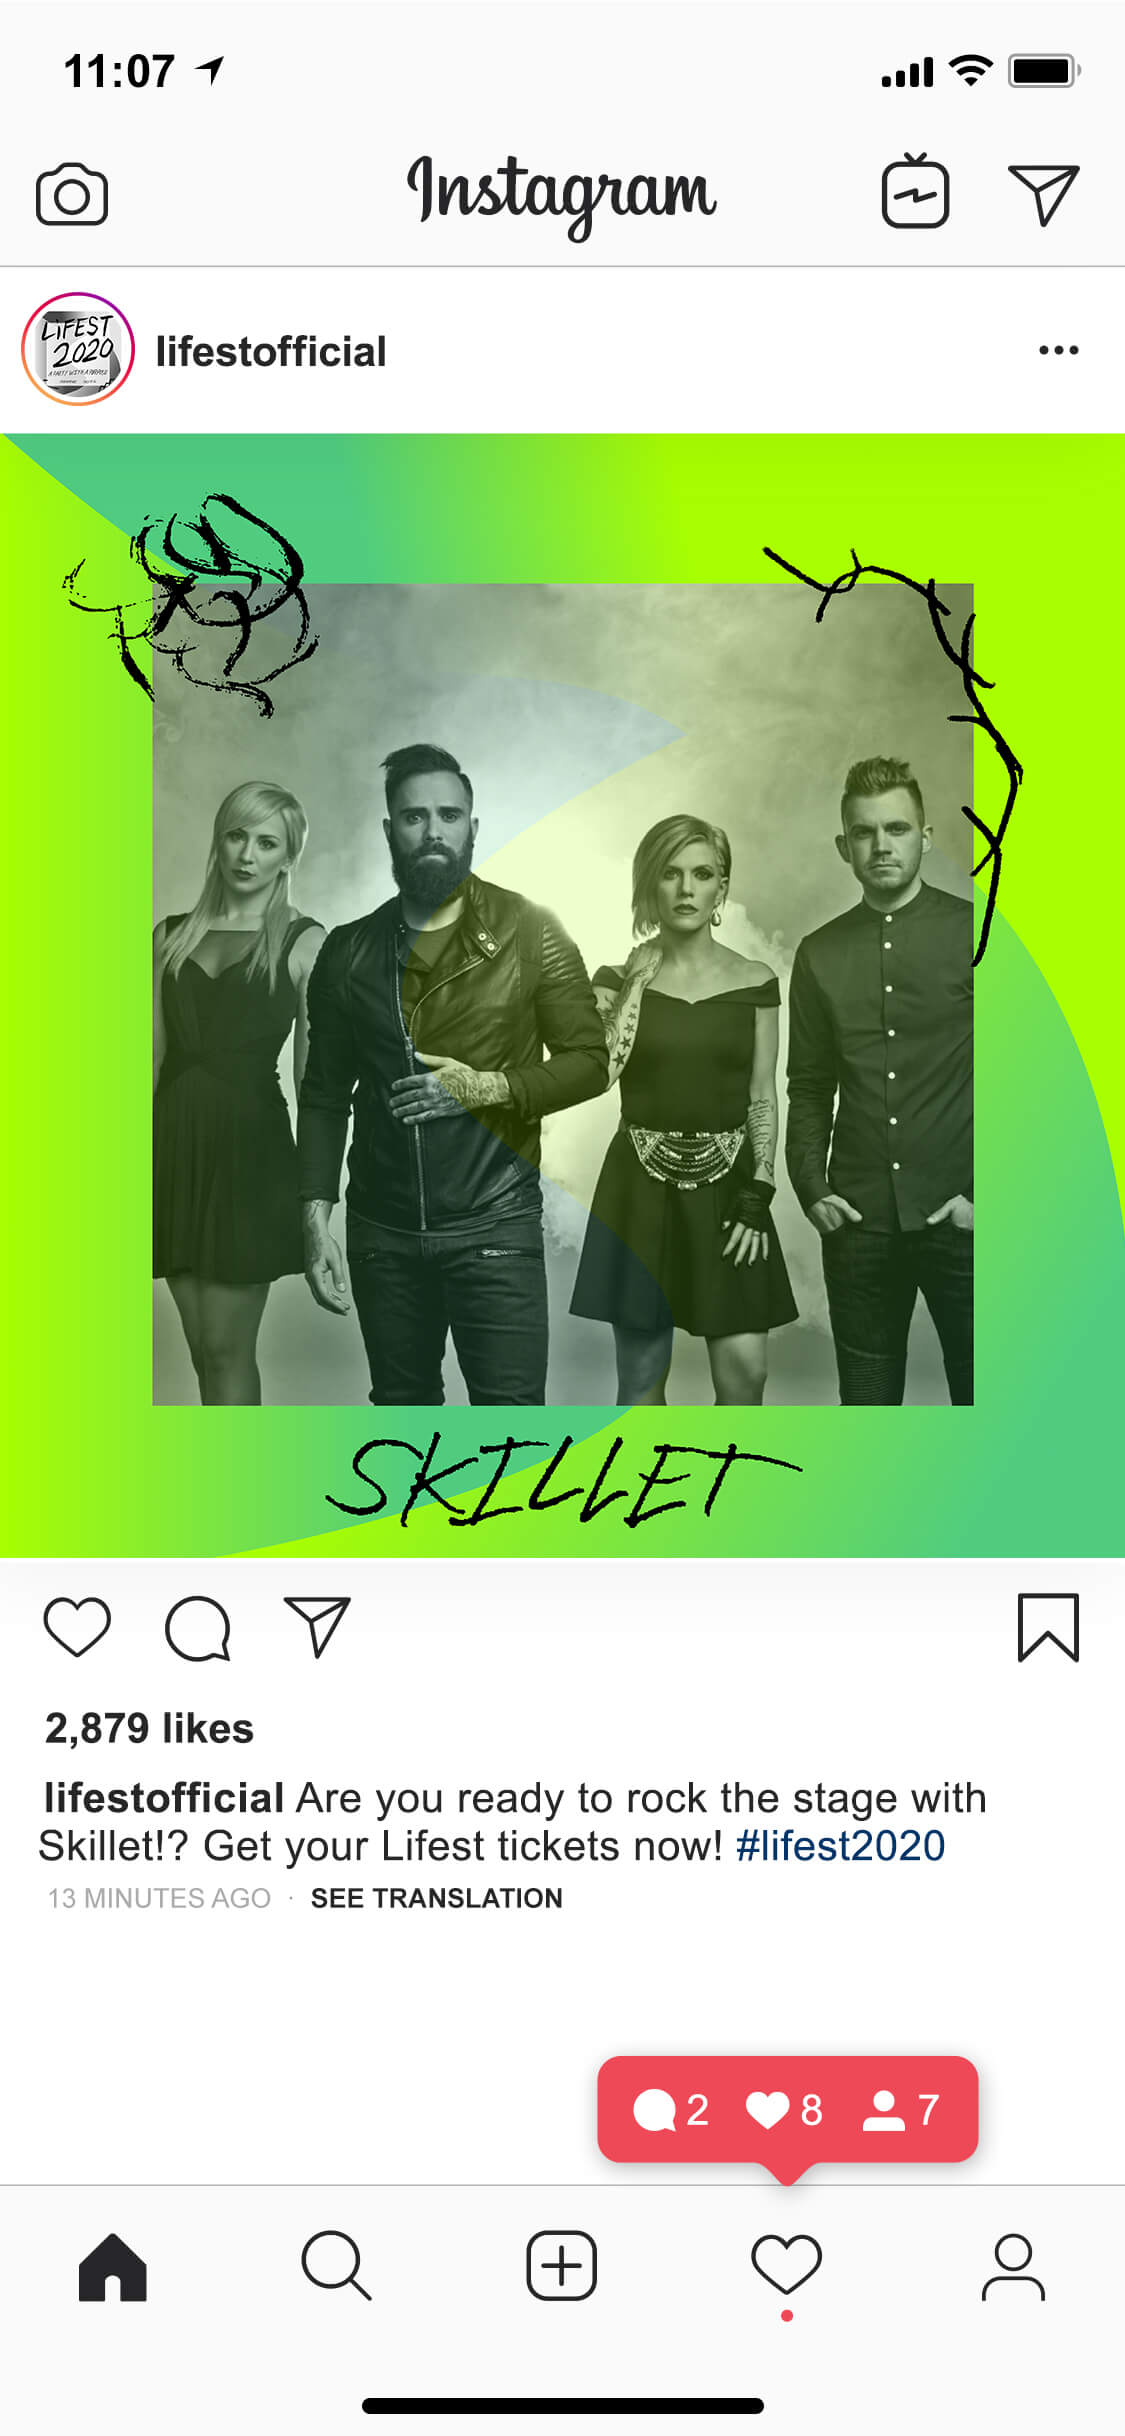 Lifest neon design Instagram post 5 mockup, featuring music artist Skillet